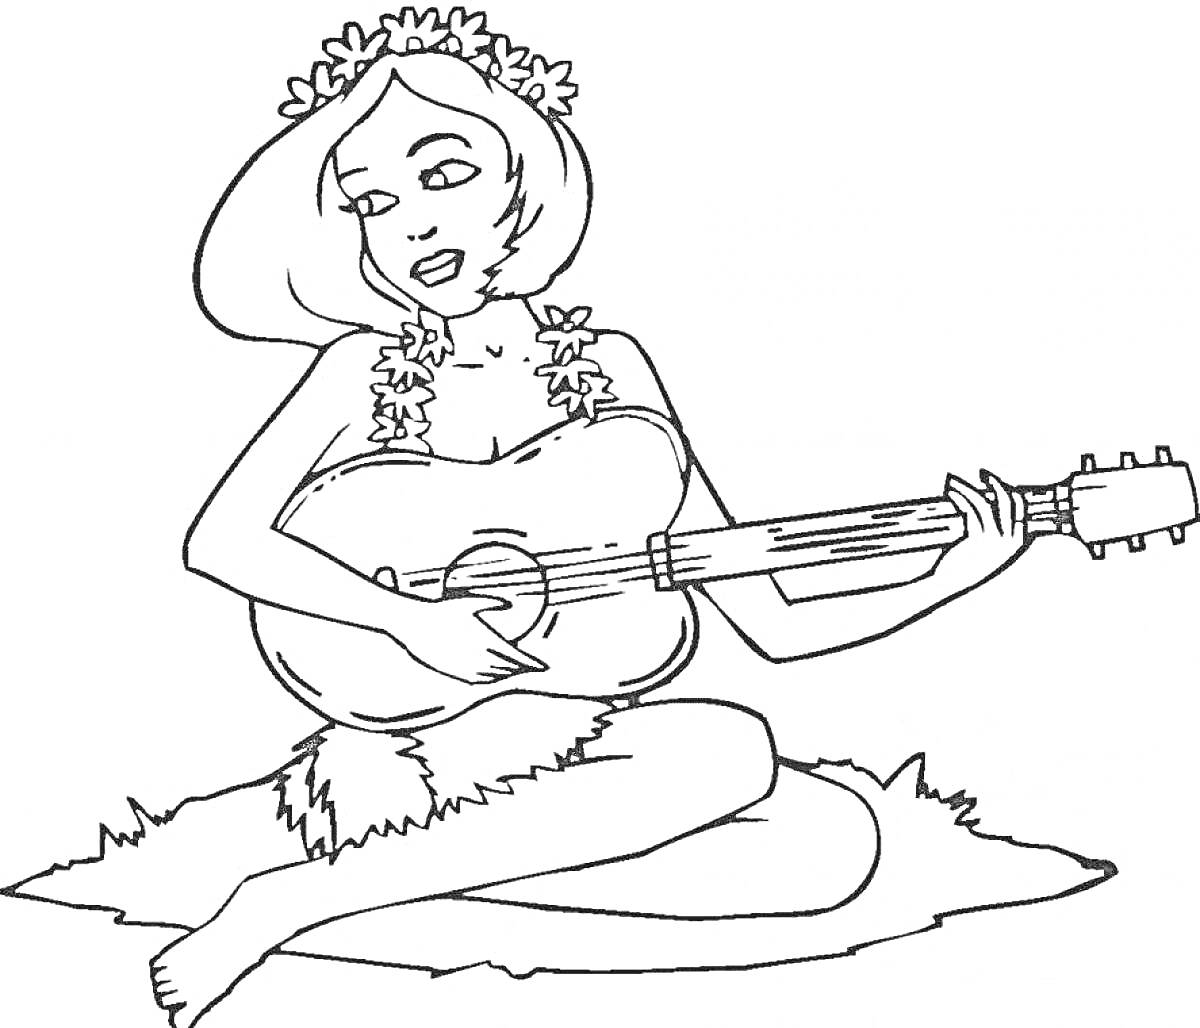 Раскраска Девушка в цветочном венке и юбке играет на гитаре, сидя на траве.